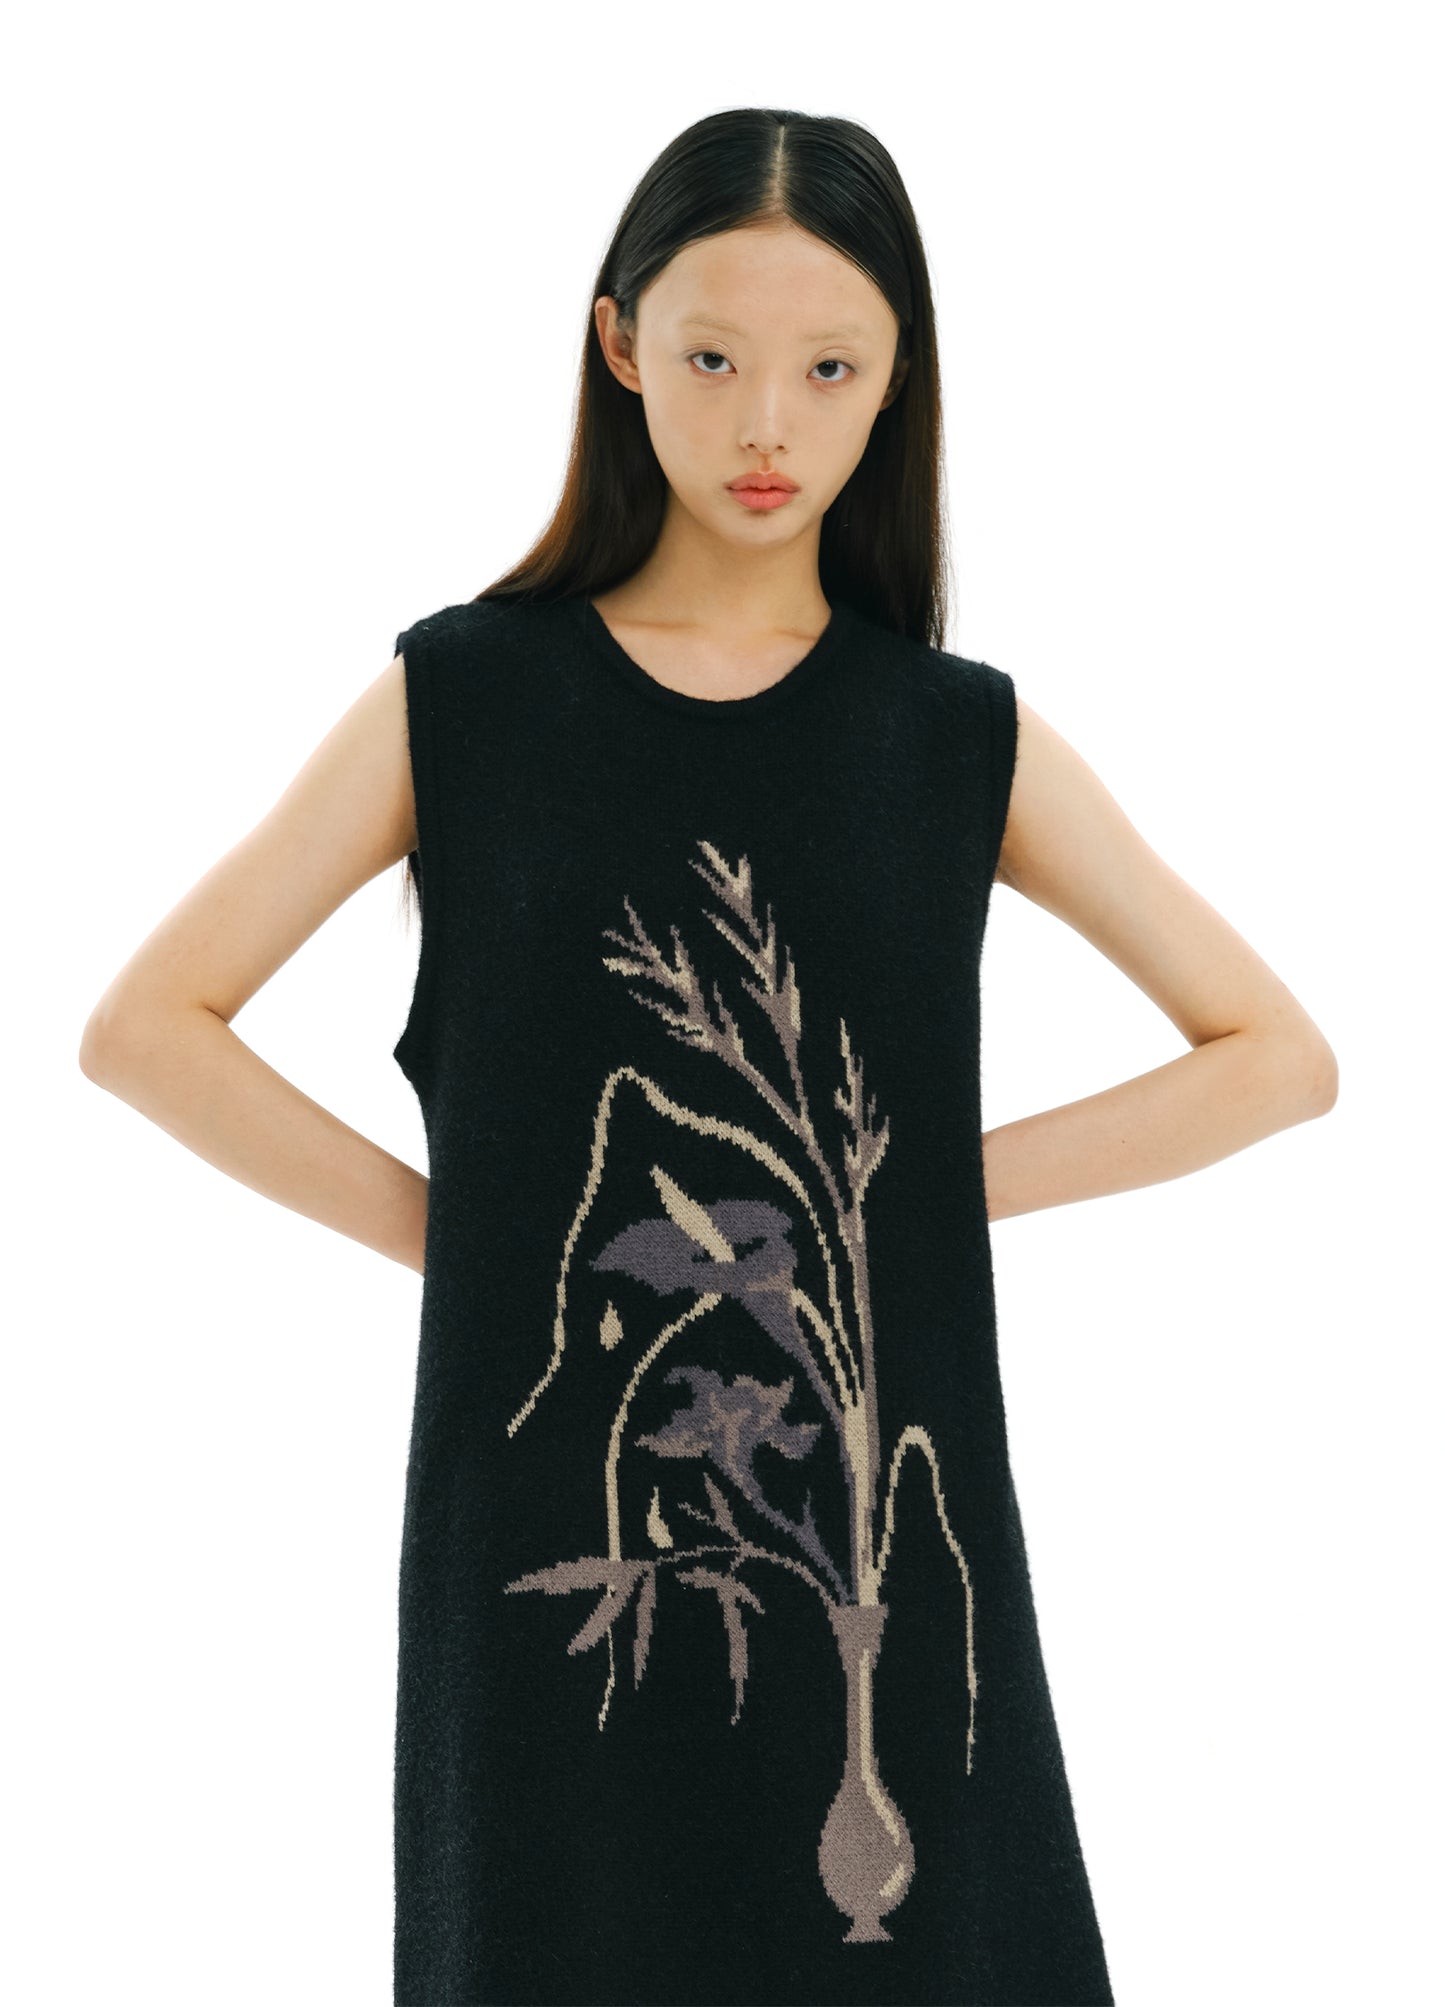 Floral Knit Dress